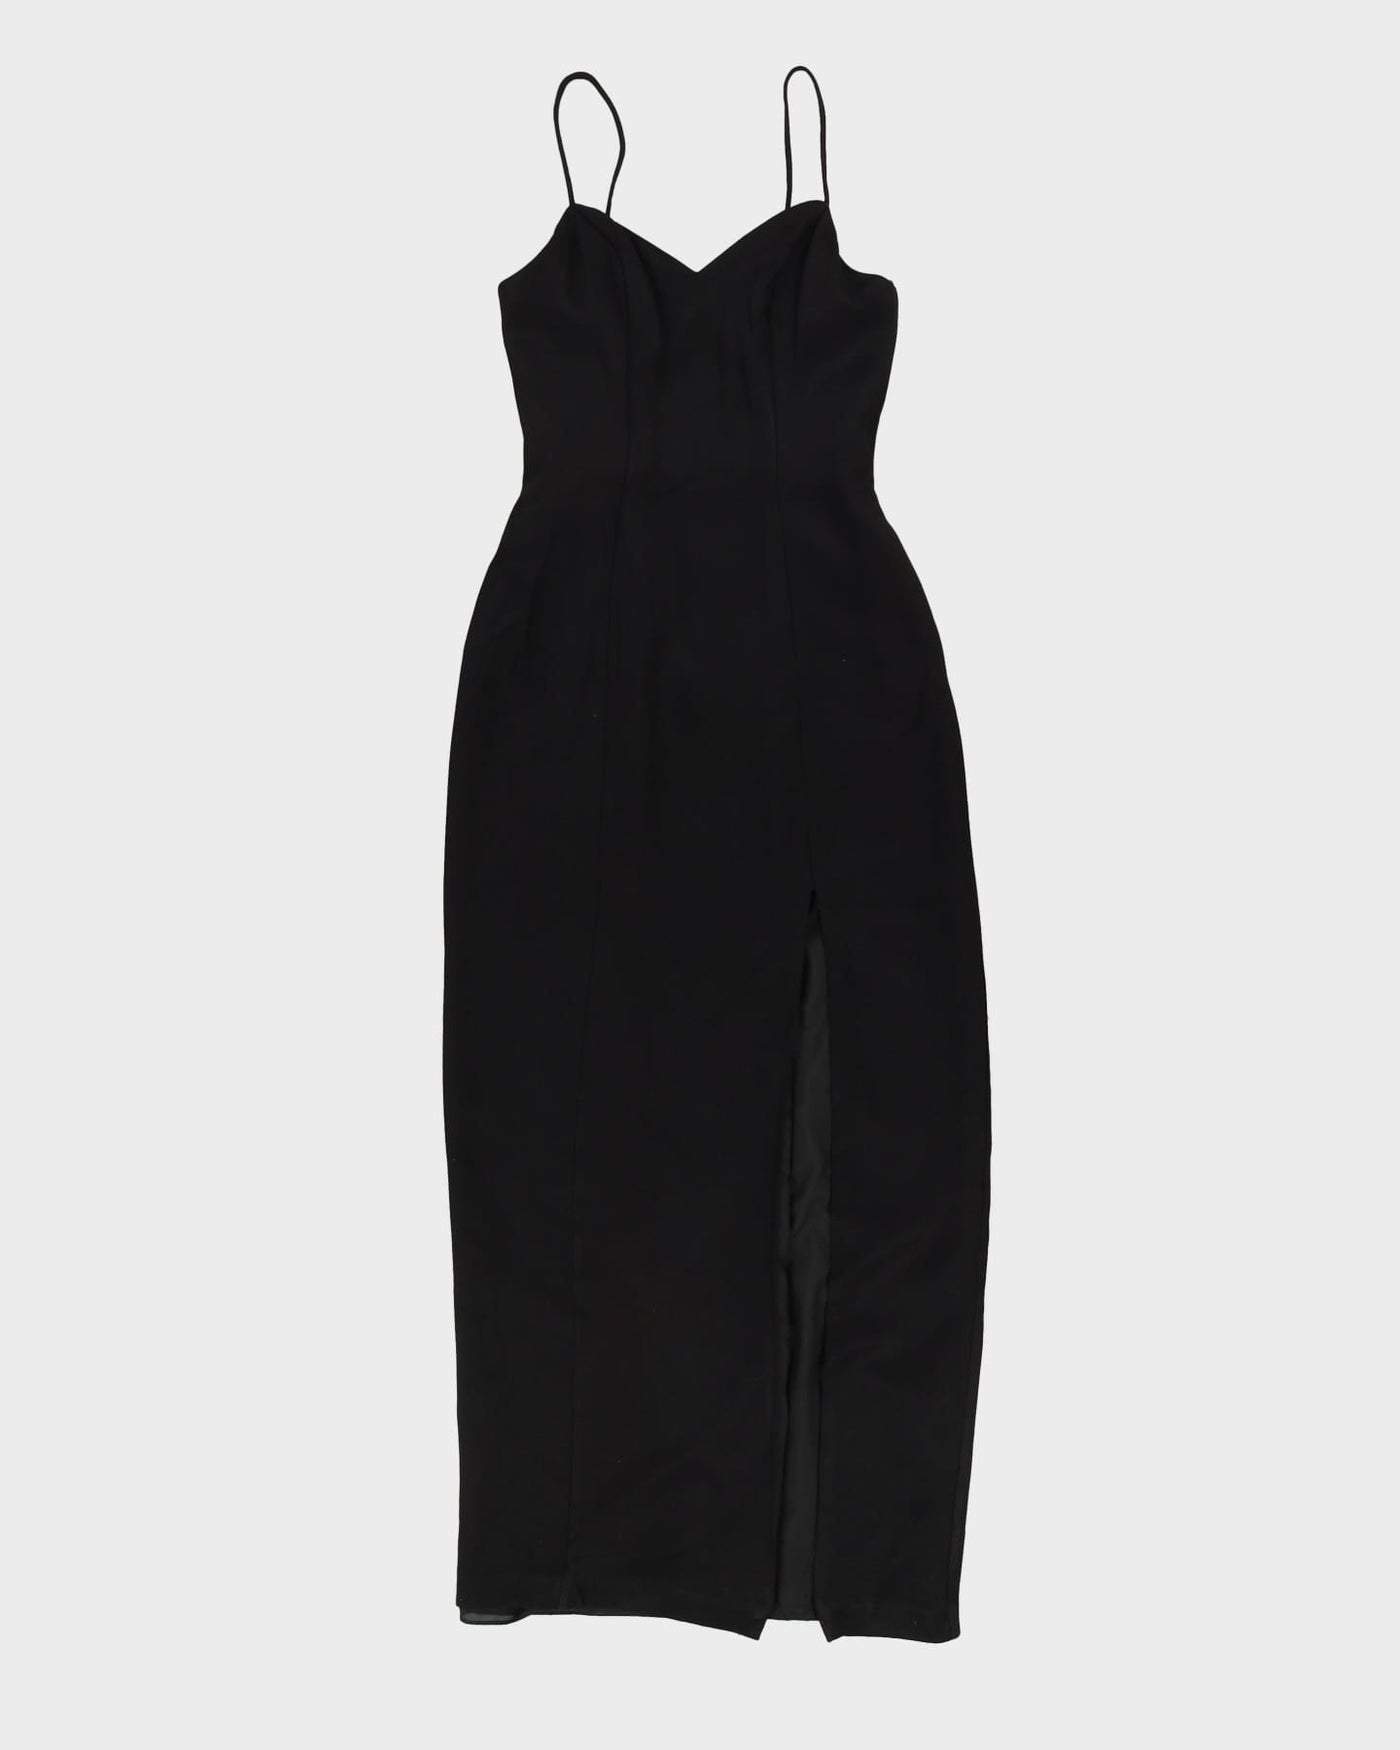 1990s Black Sleeveless Cocktail Dress - XS